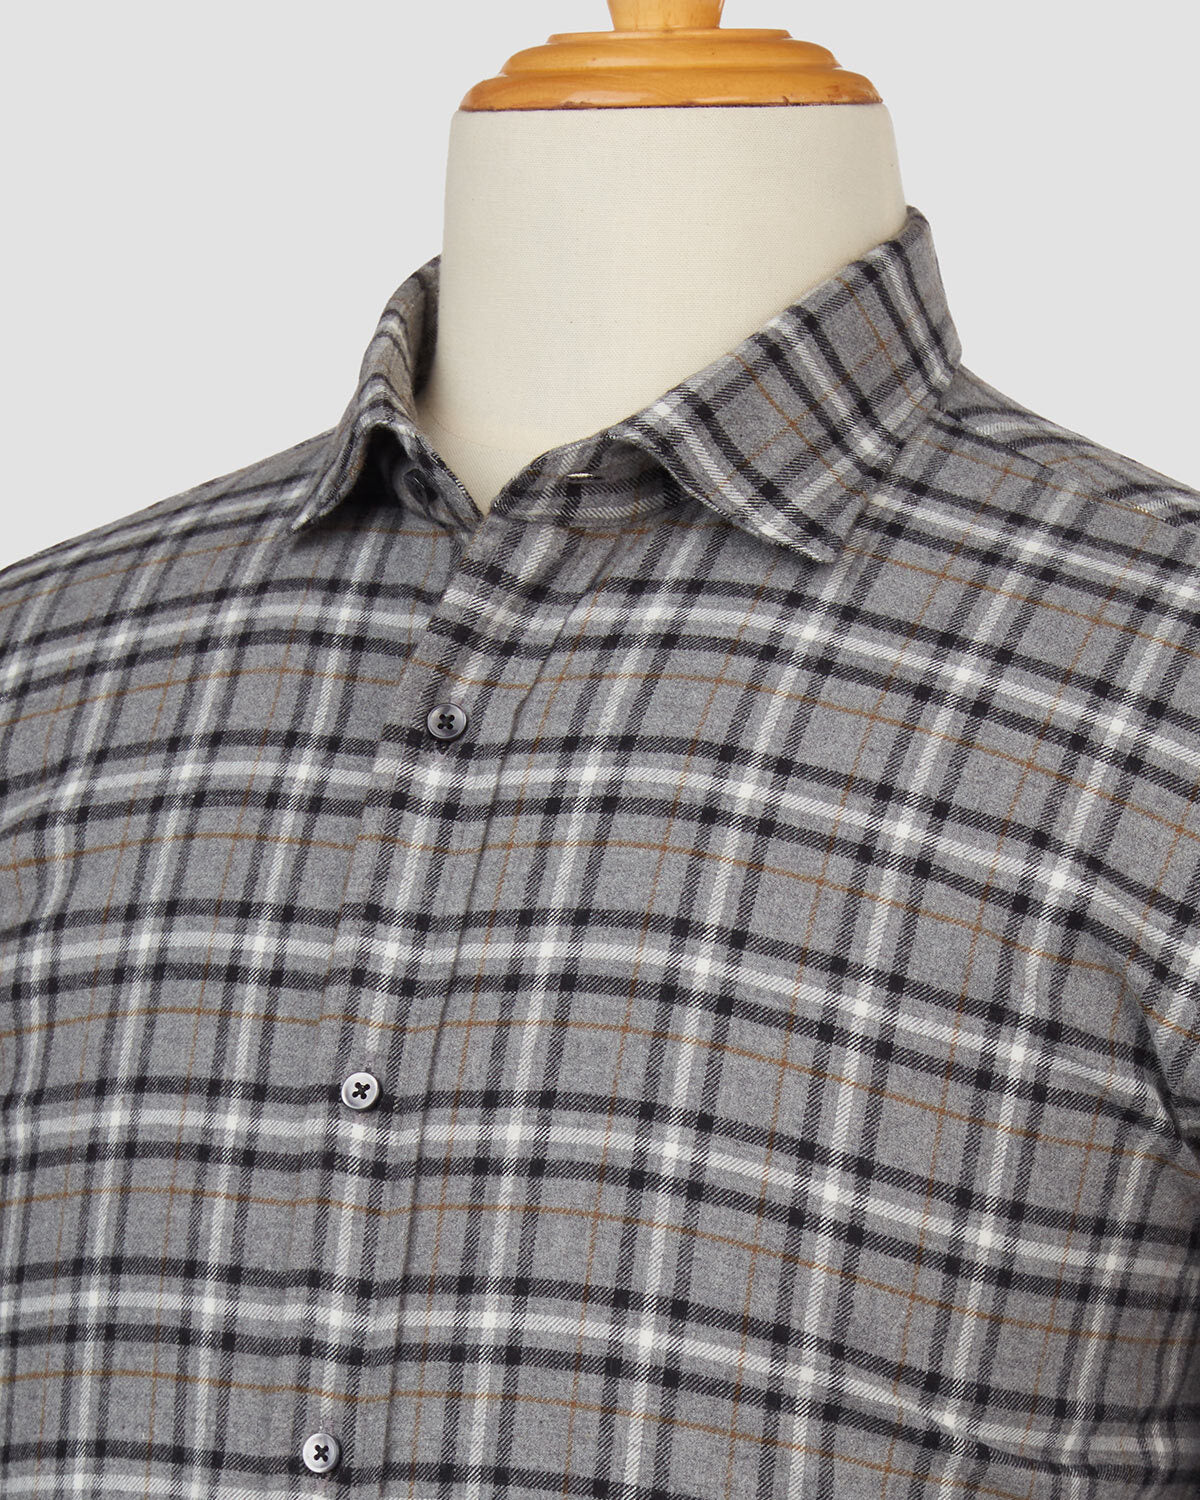 Bombay Shirt Company - Japanese Silica Checked Shirt